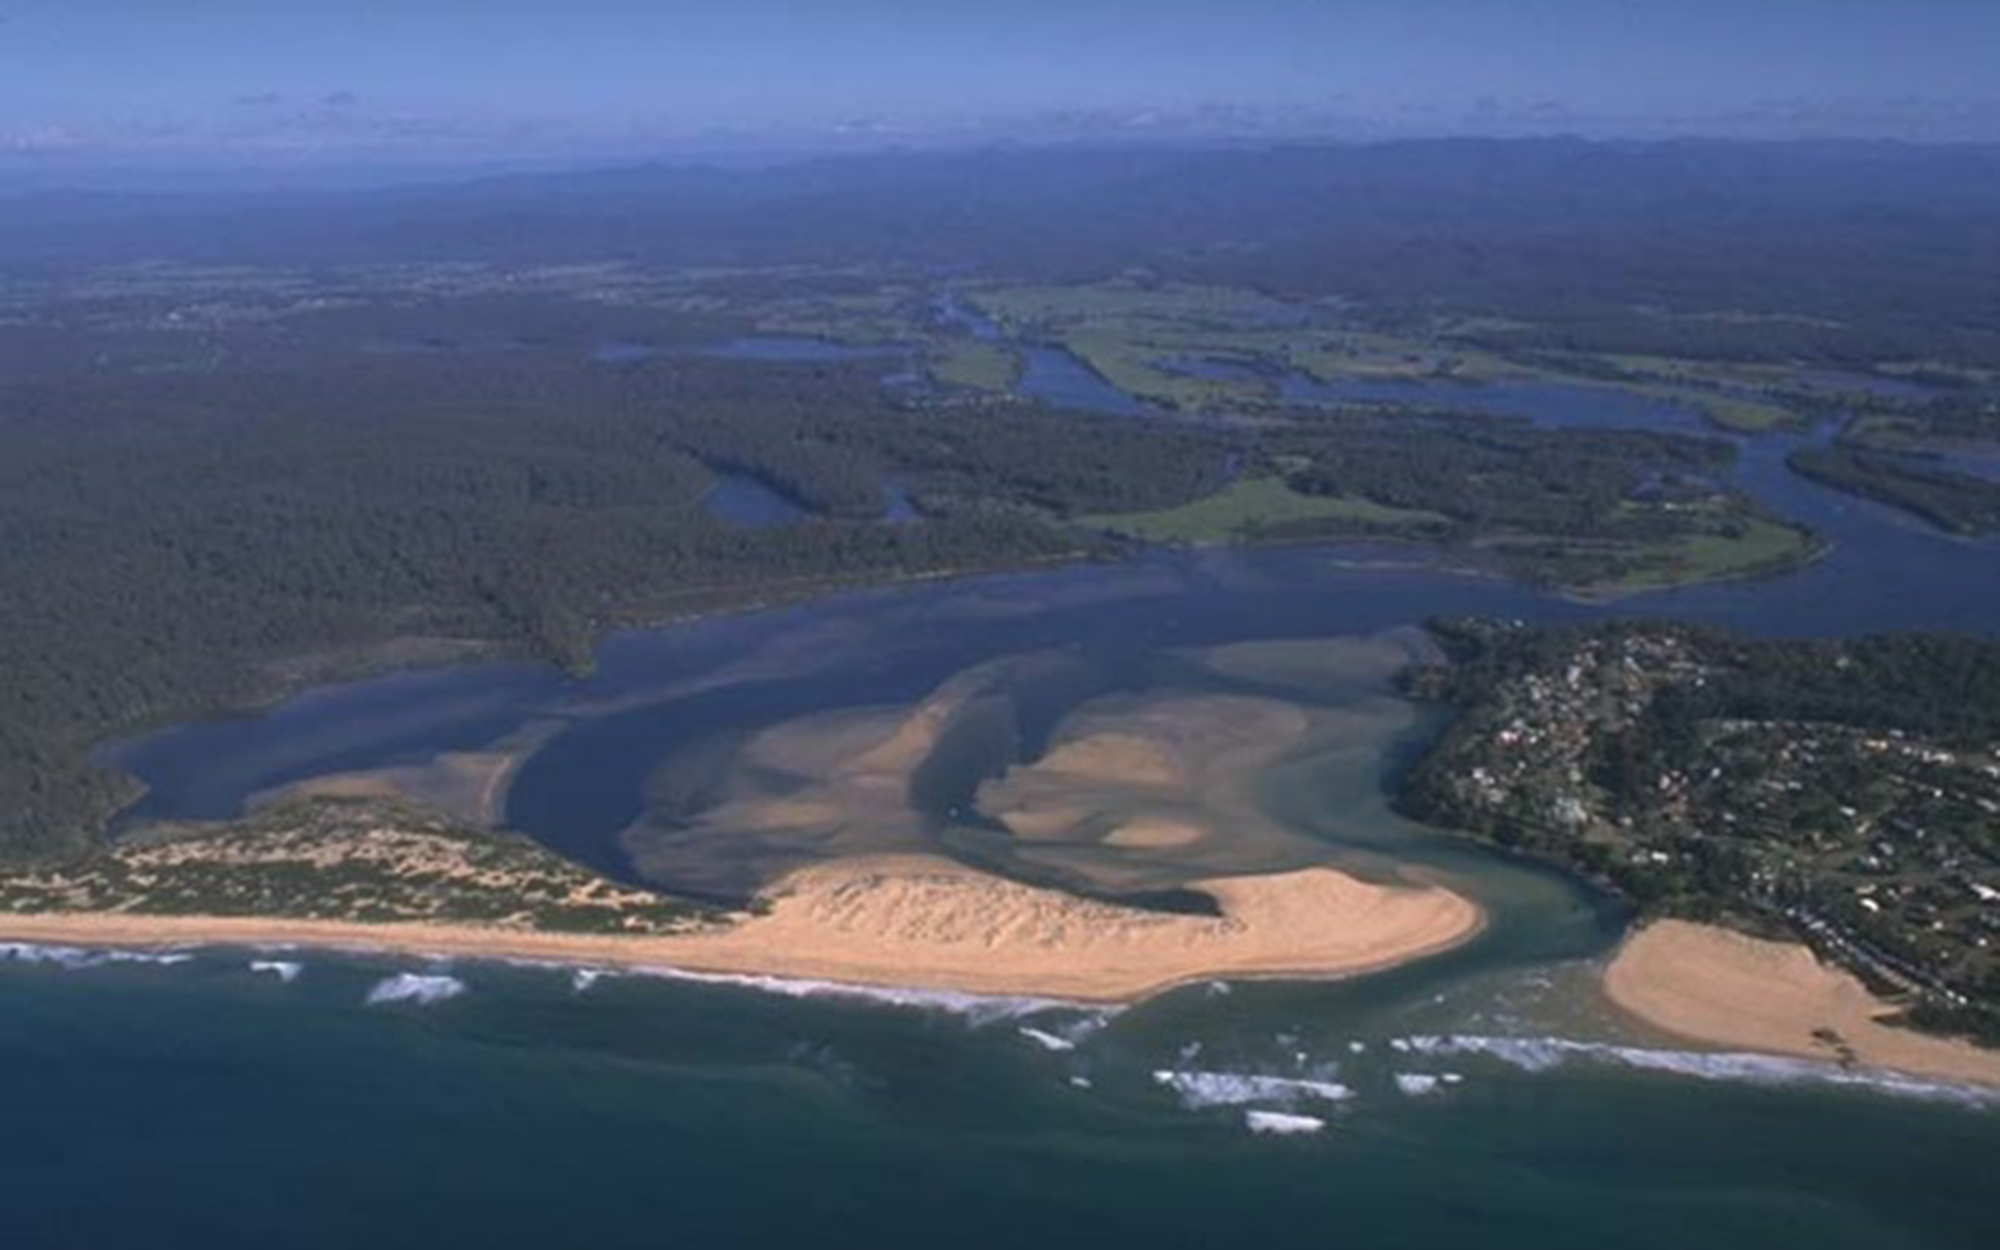 Aerial vies of the Tuross River estuary